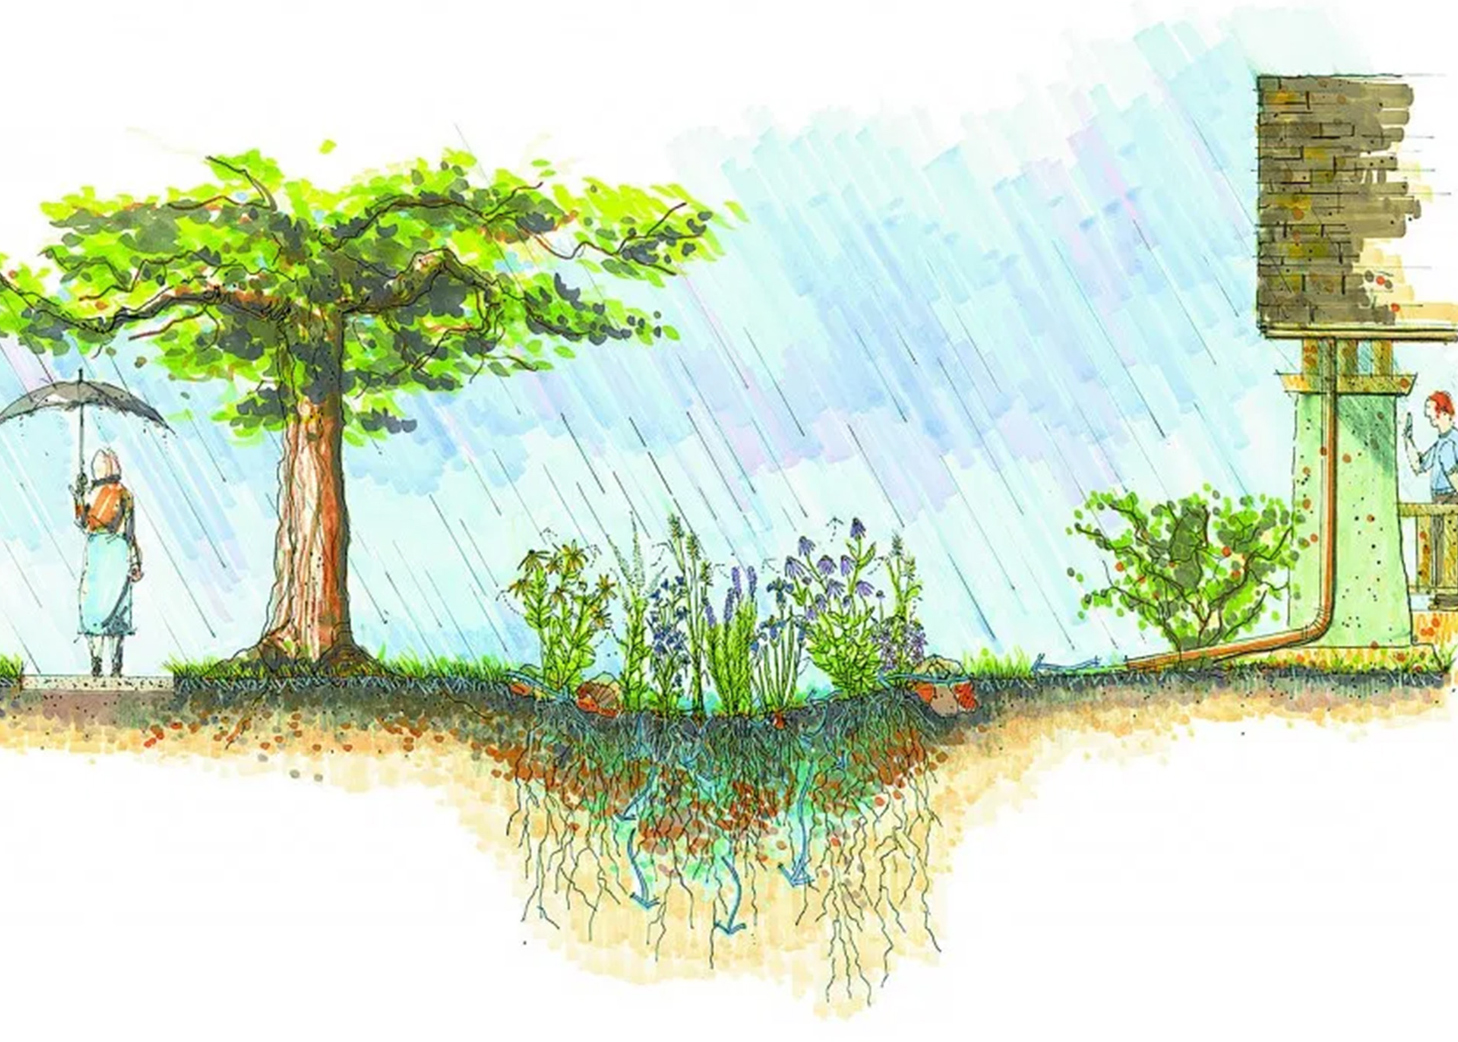 Corte ilustrativo de um jardim de chuva